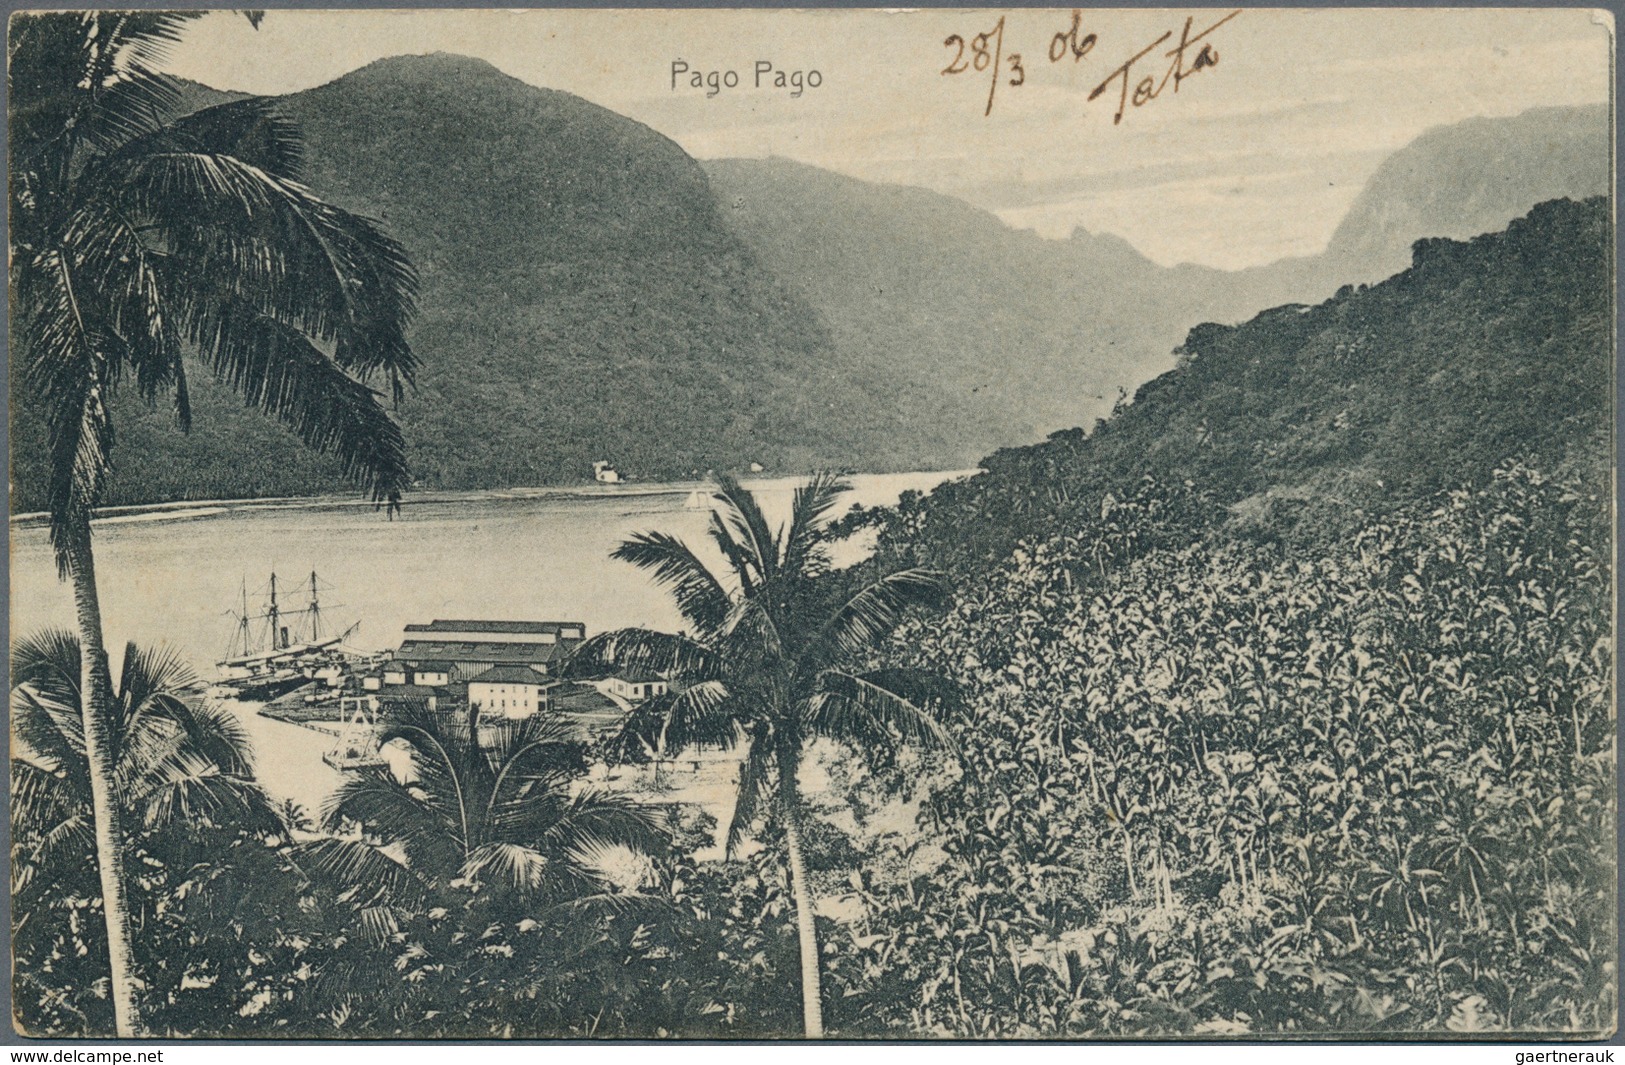 12409 Samoa: 1906 Picture Postcard "Pago Pago" To Moravia, Austria Franked By US 1903 'Washington' 2c. Tie - Samoa